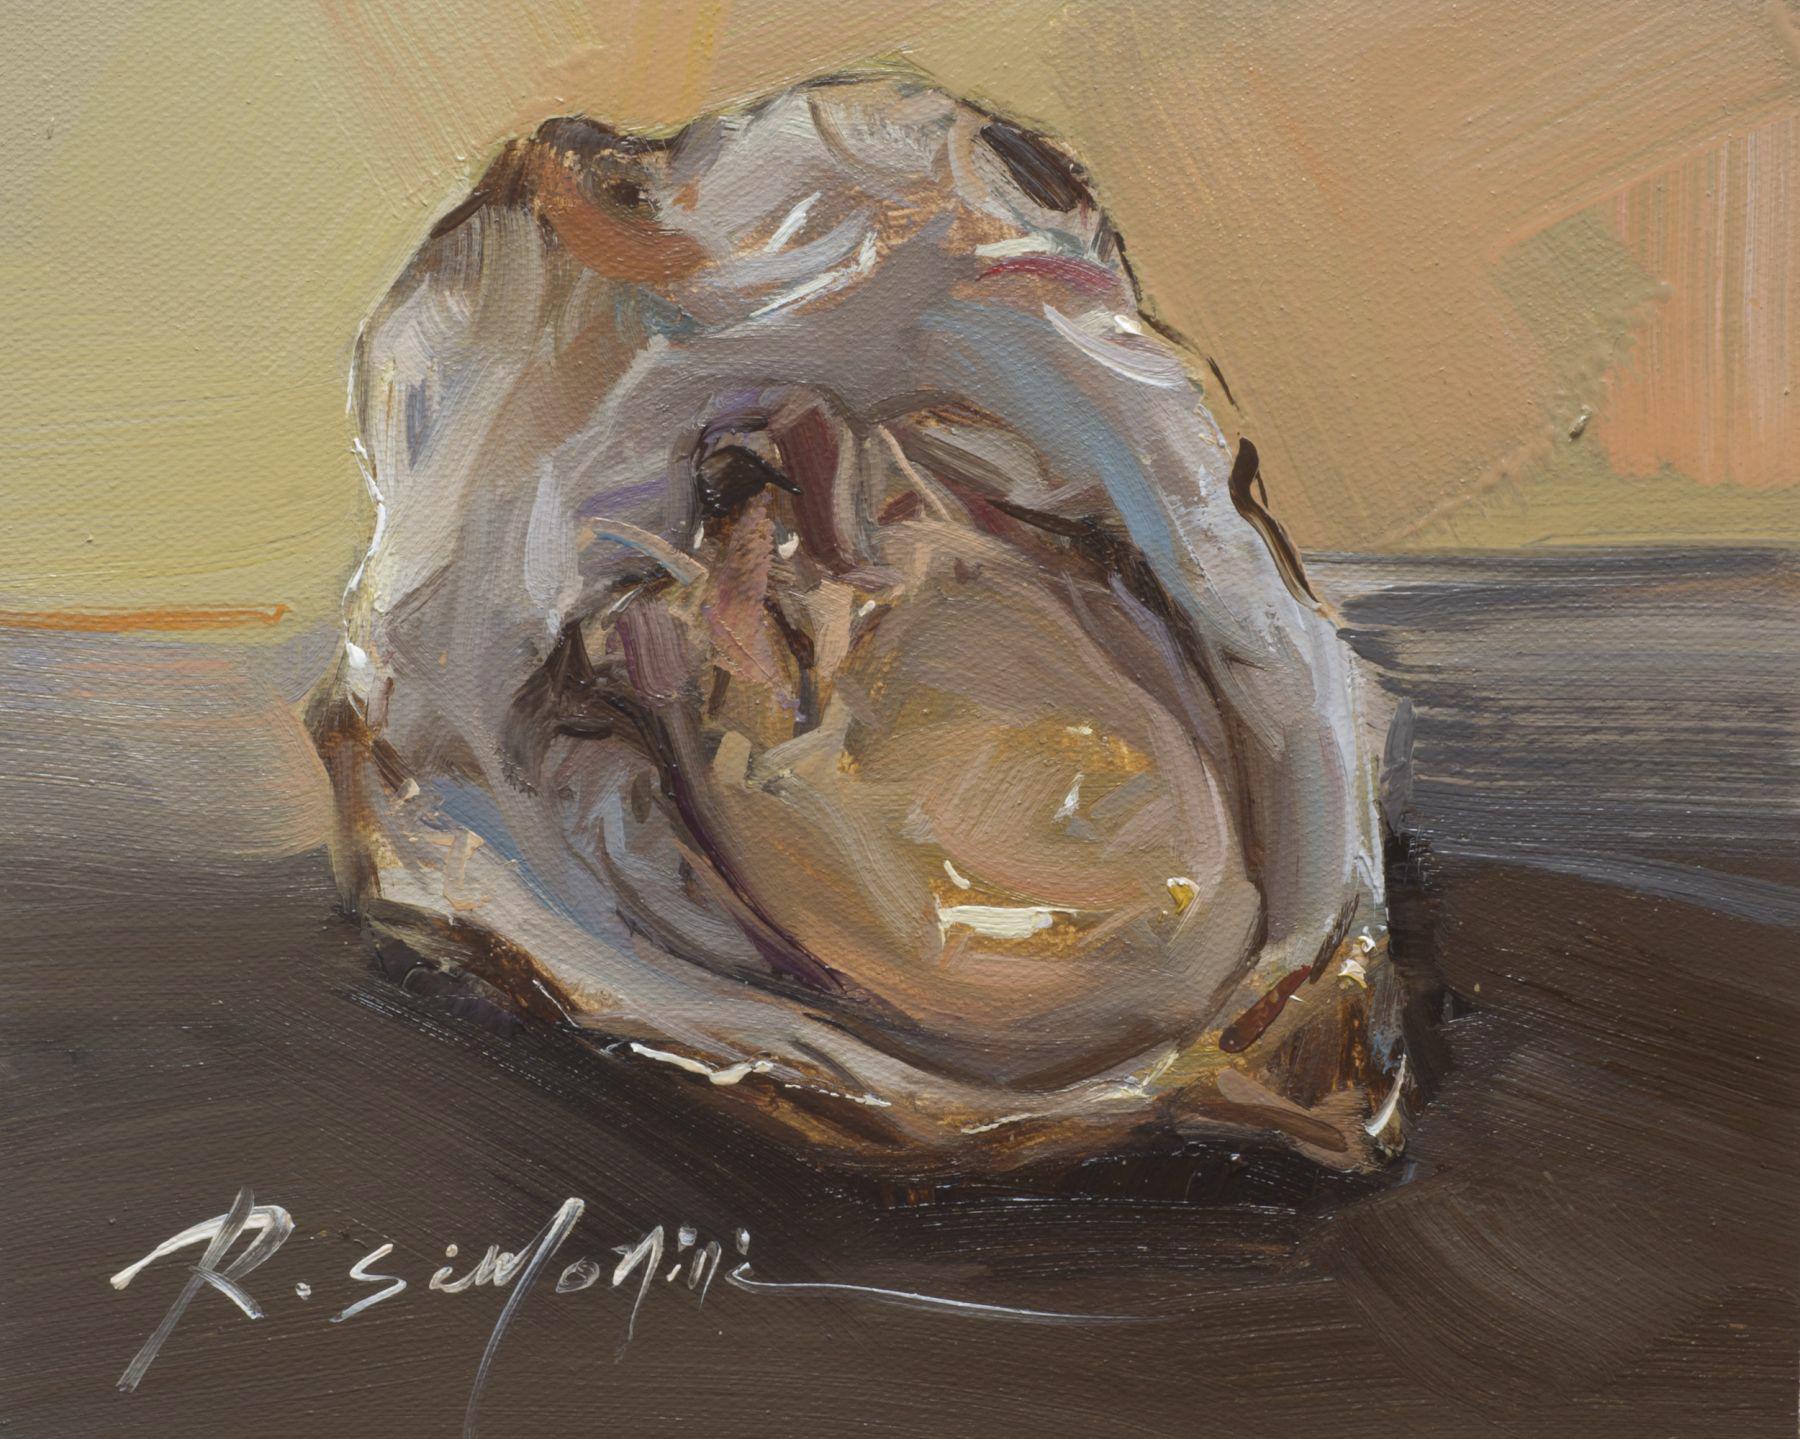 Ray Simonini "Raw" 8x10 Oyster Shell Impressionist Ölgemälde auf Leinwand